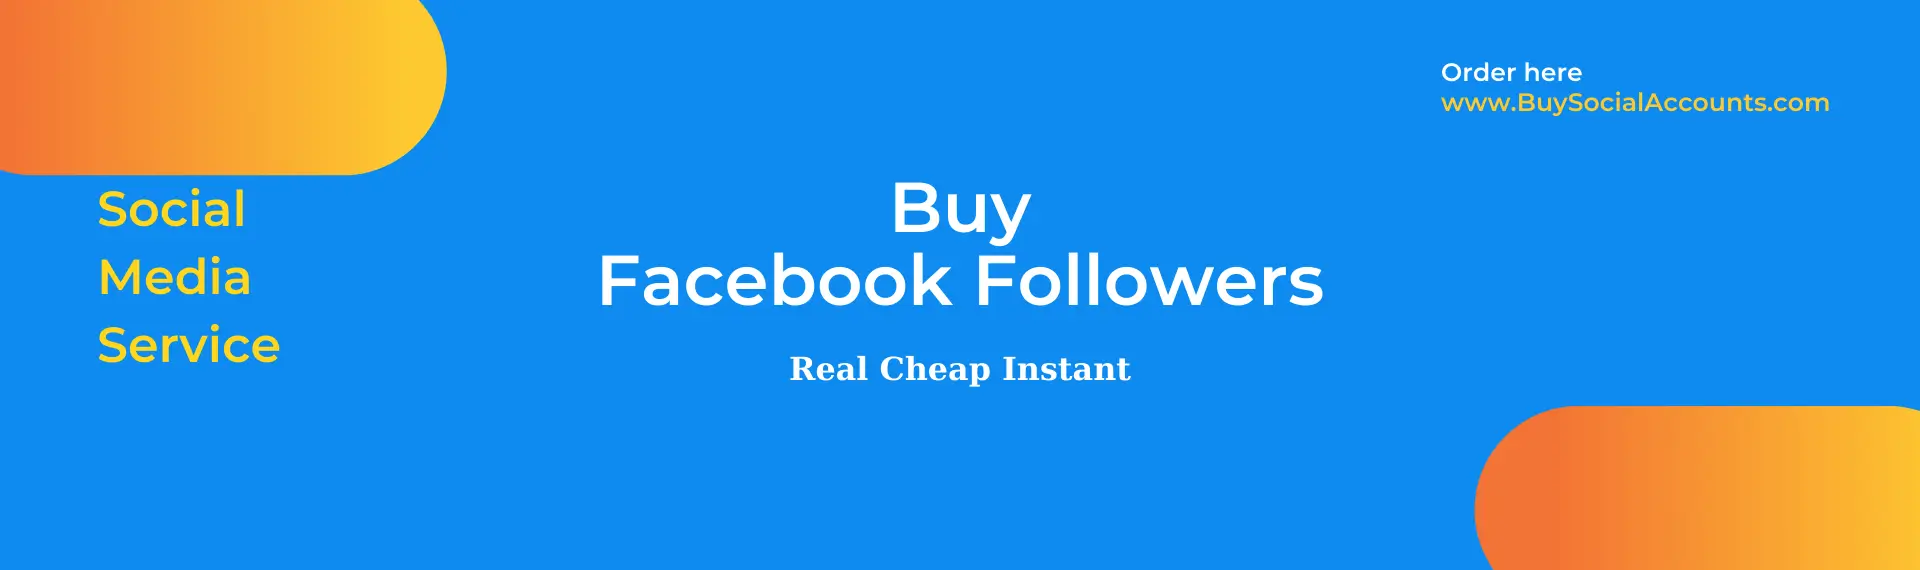 buying Facebook followers